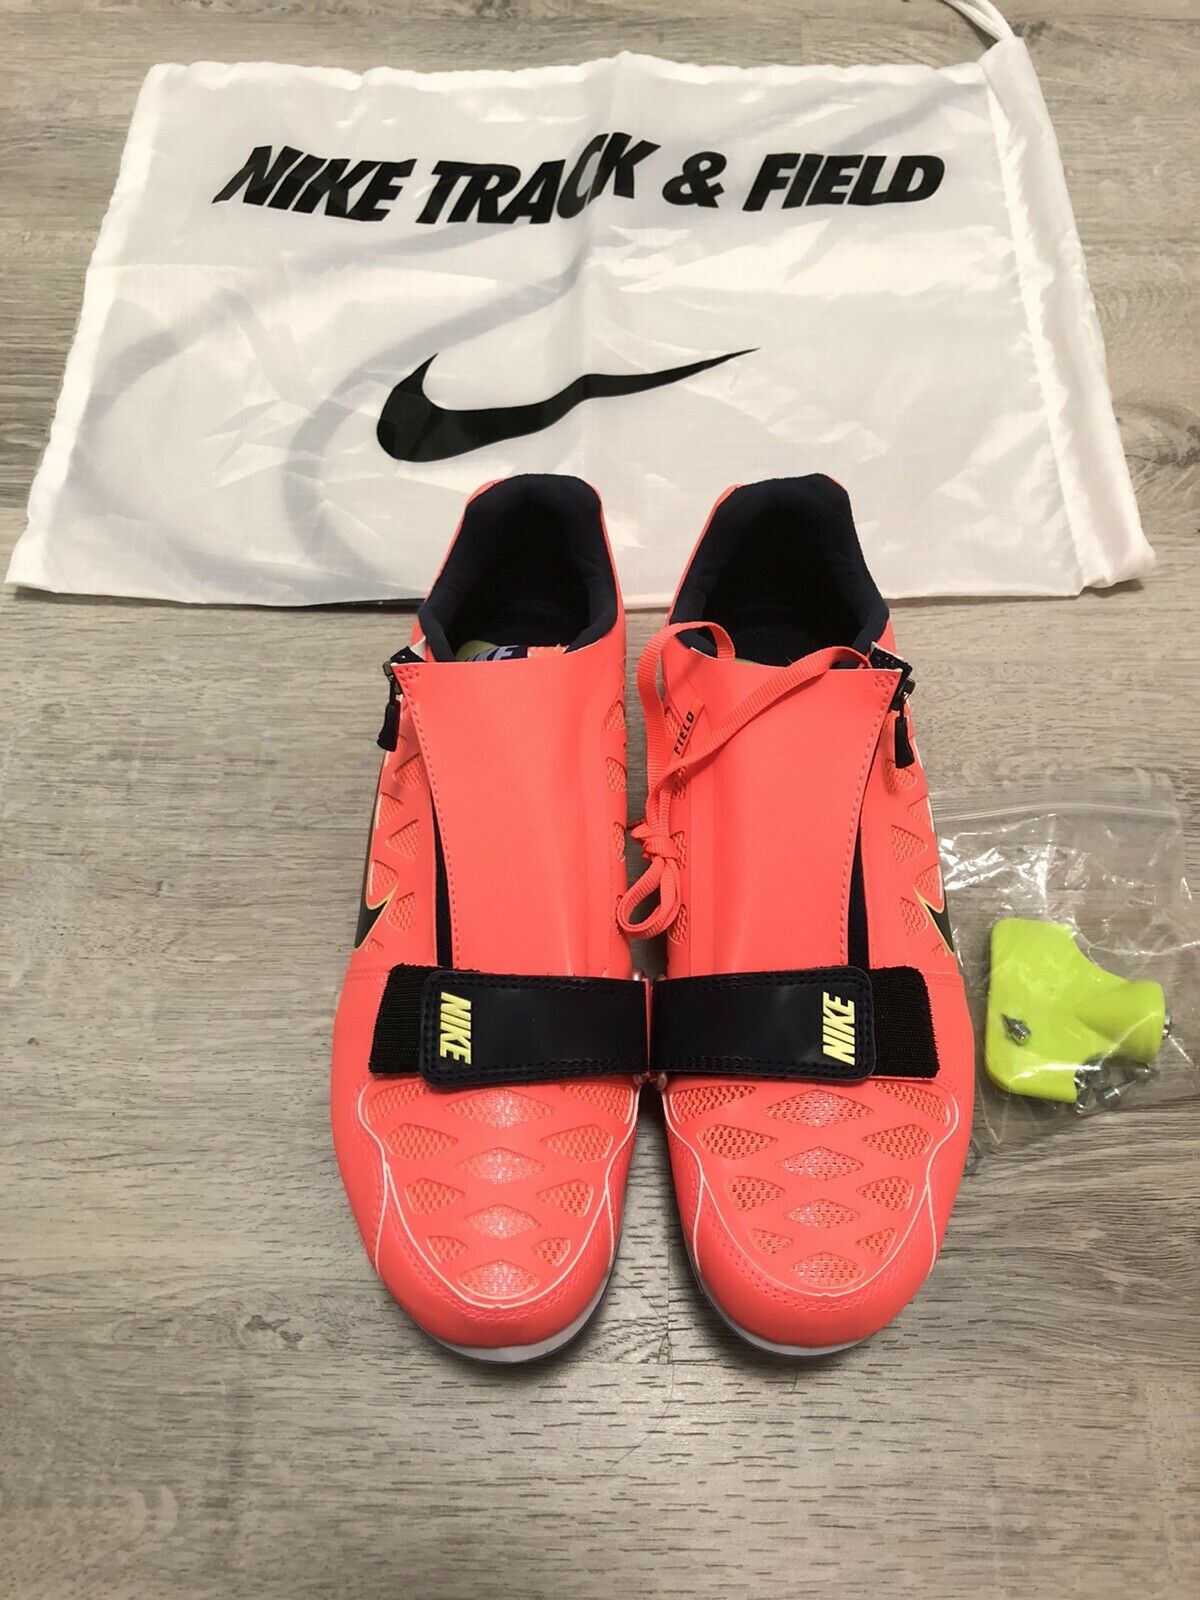 New Nike Zoom Lj 4 Long Jump Track & Field Mango Orange Spikes Shoes Mens 7.5